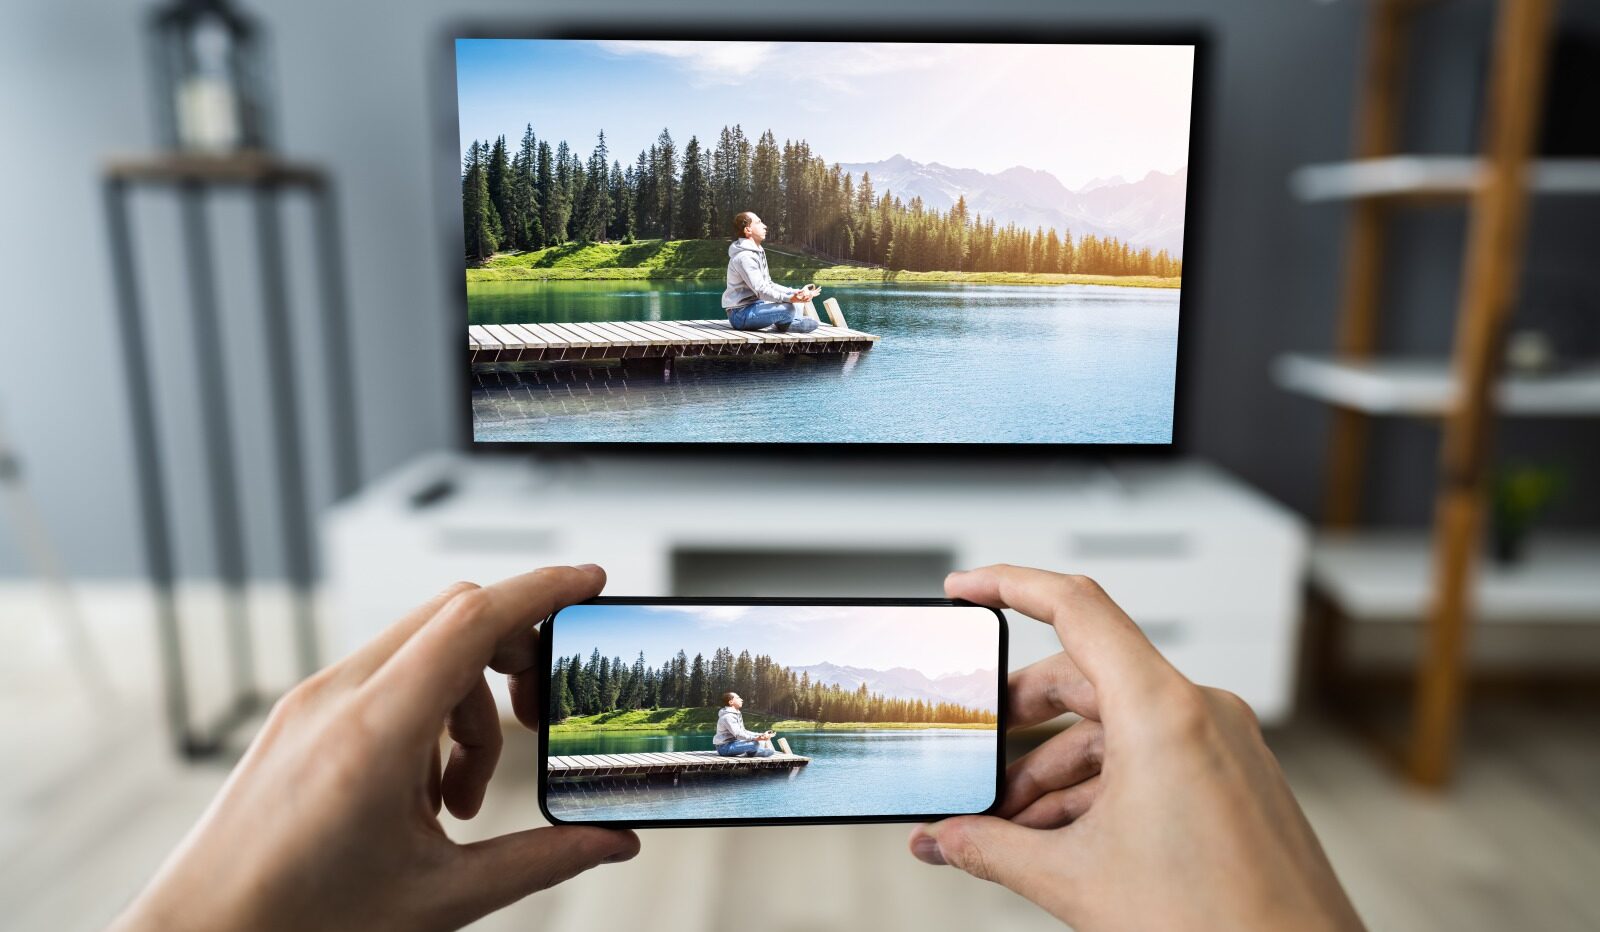 Cara Menghubungkan HP Samsung ke TV